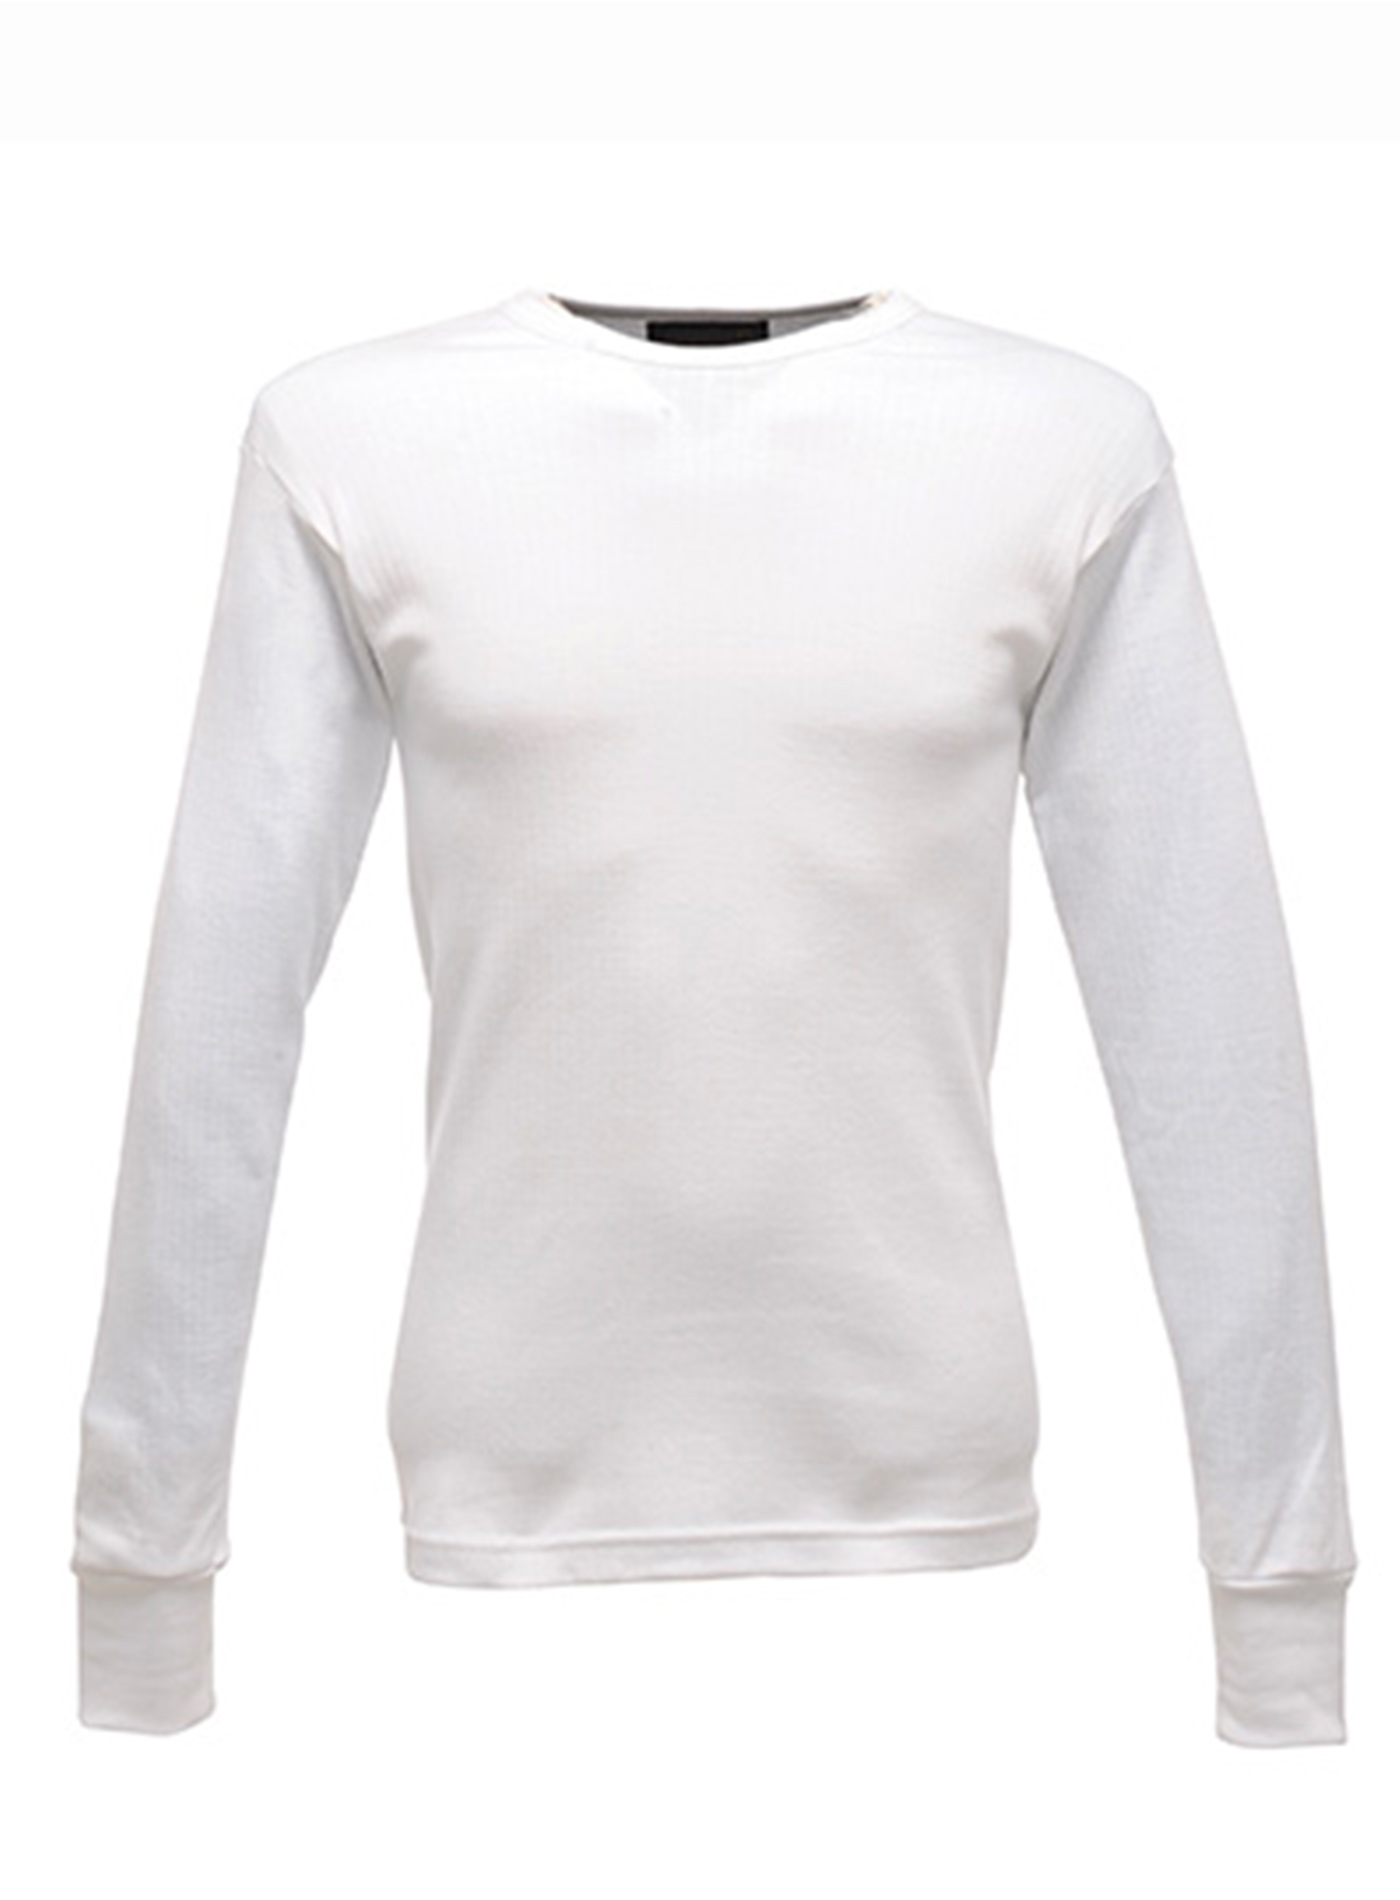 Pánské tričko Thermal - Bílá XL